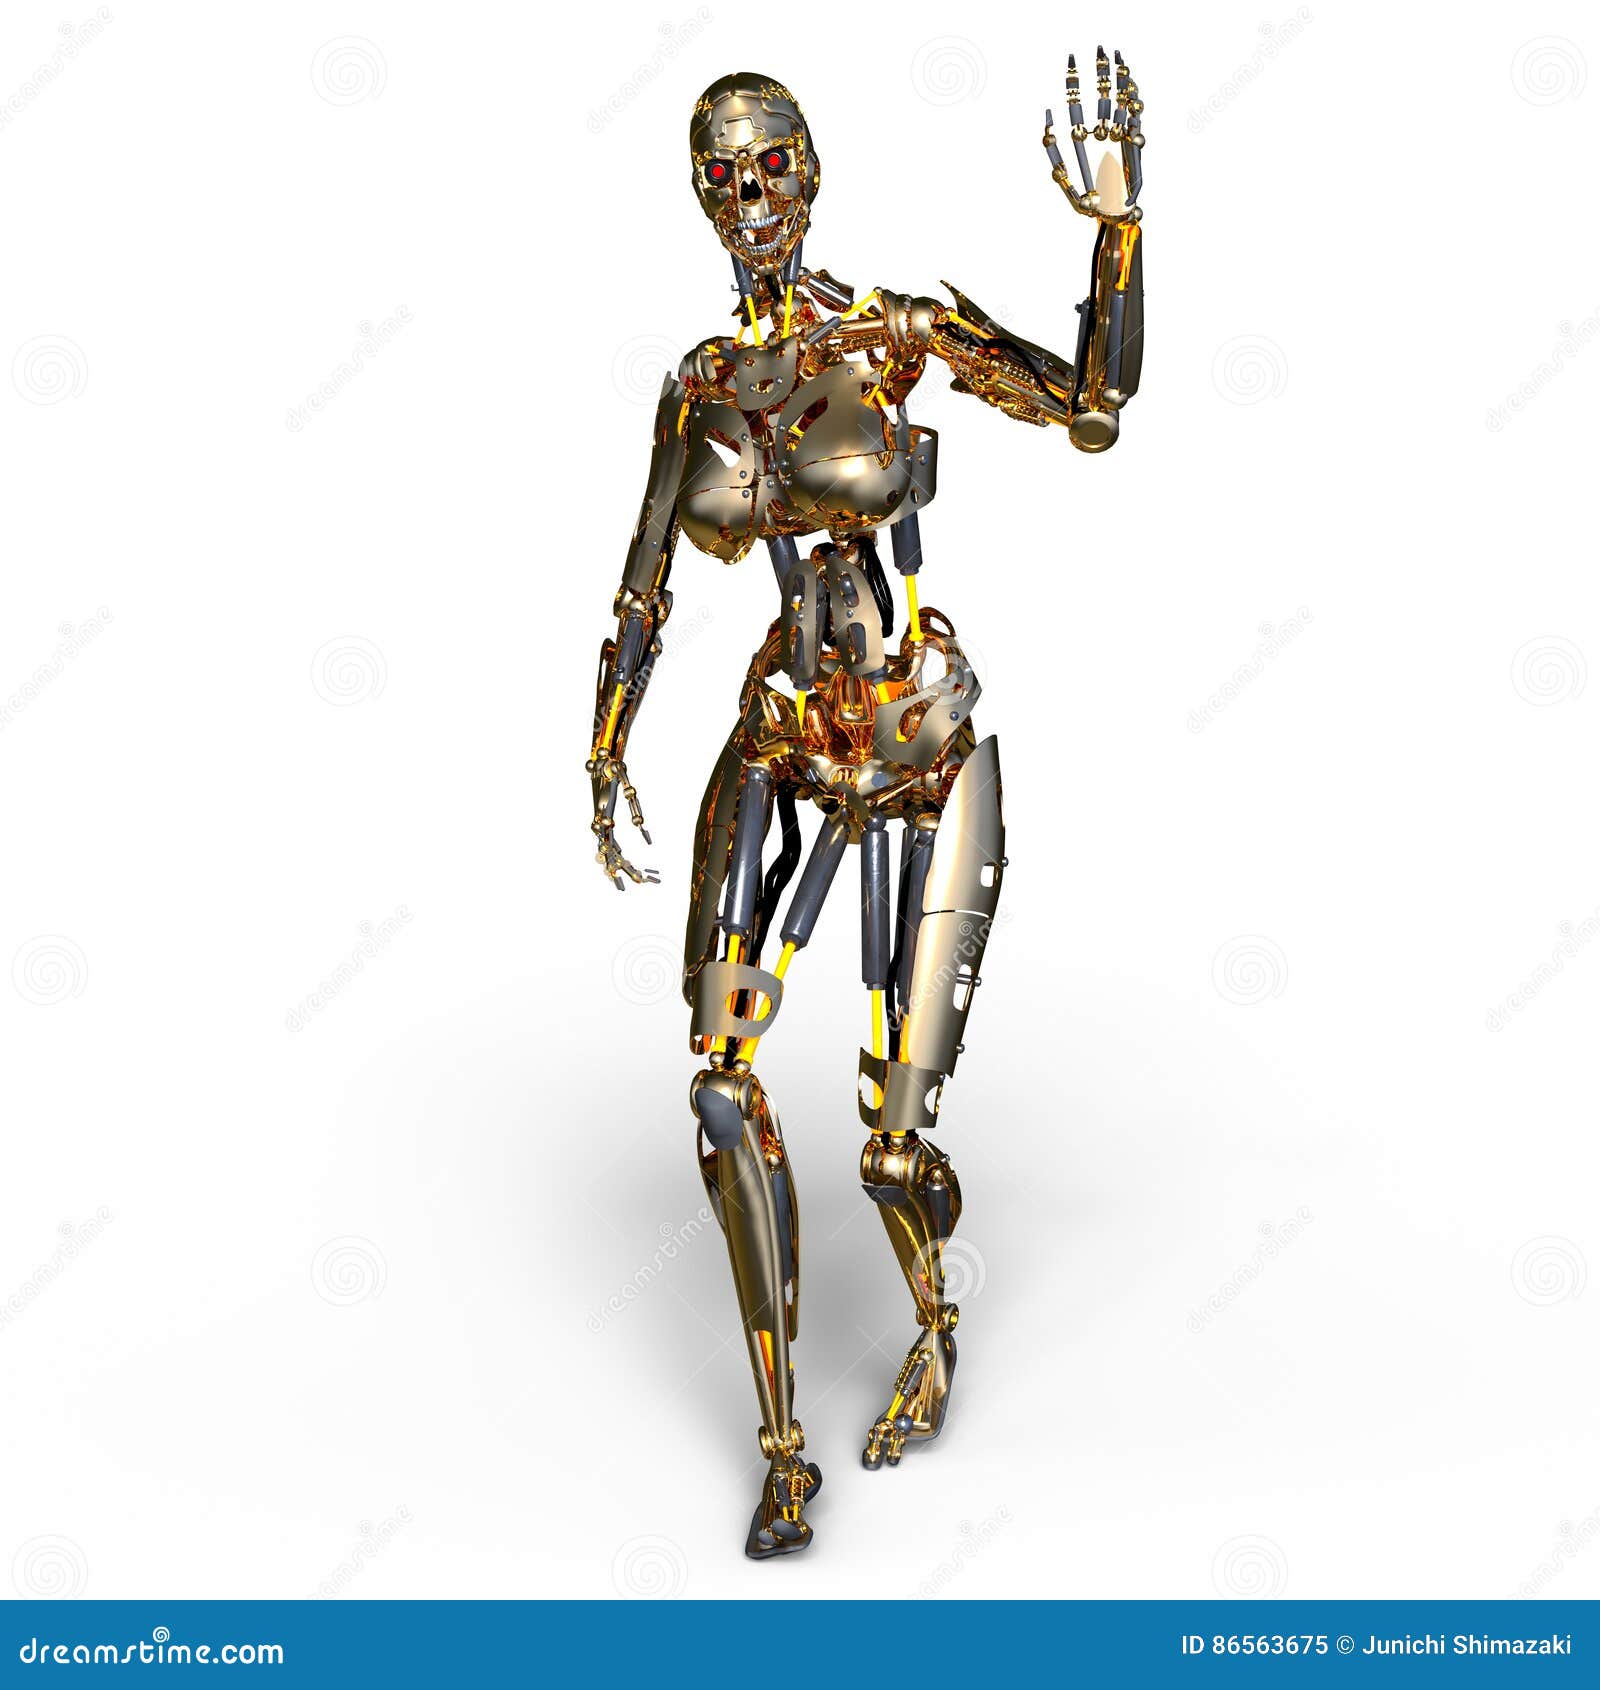 C4D模型女性机器人设计图__其他模型_3D设计_设计图库_昵图网nipic.com